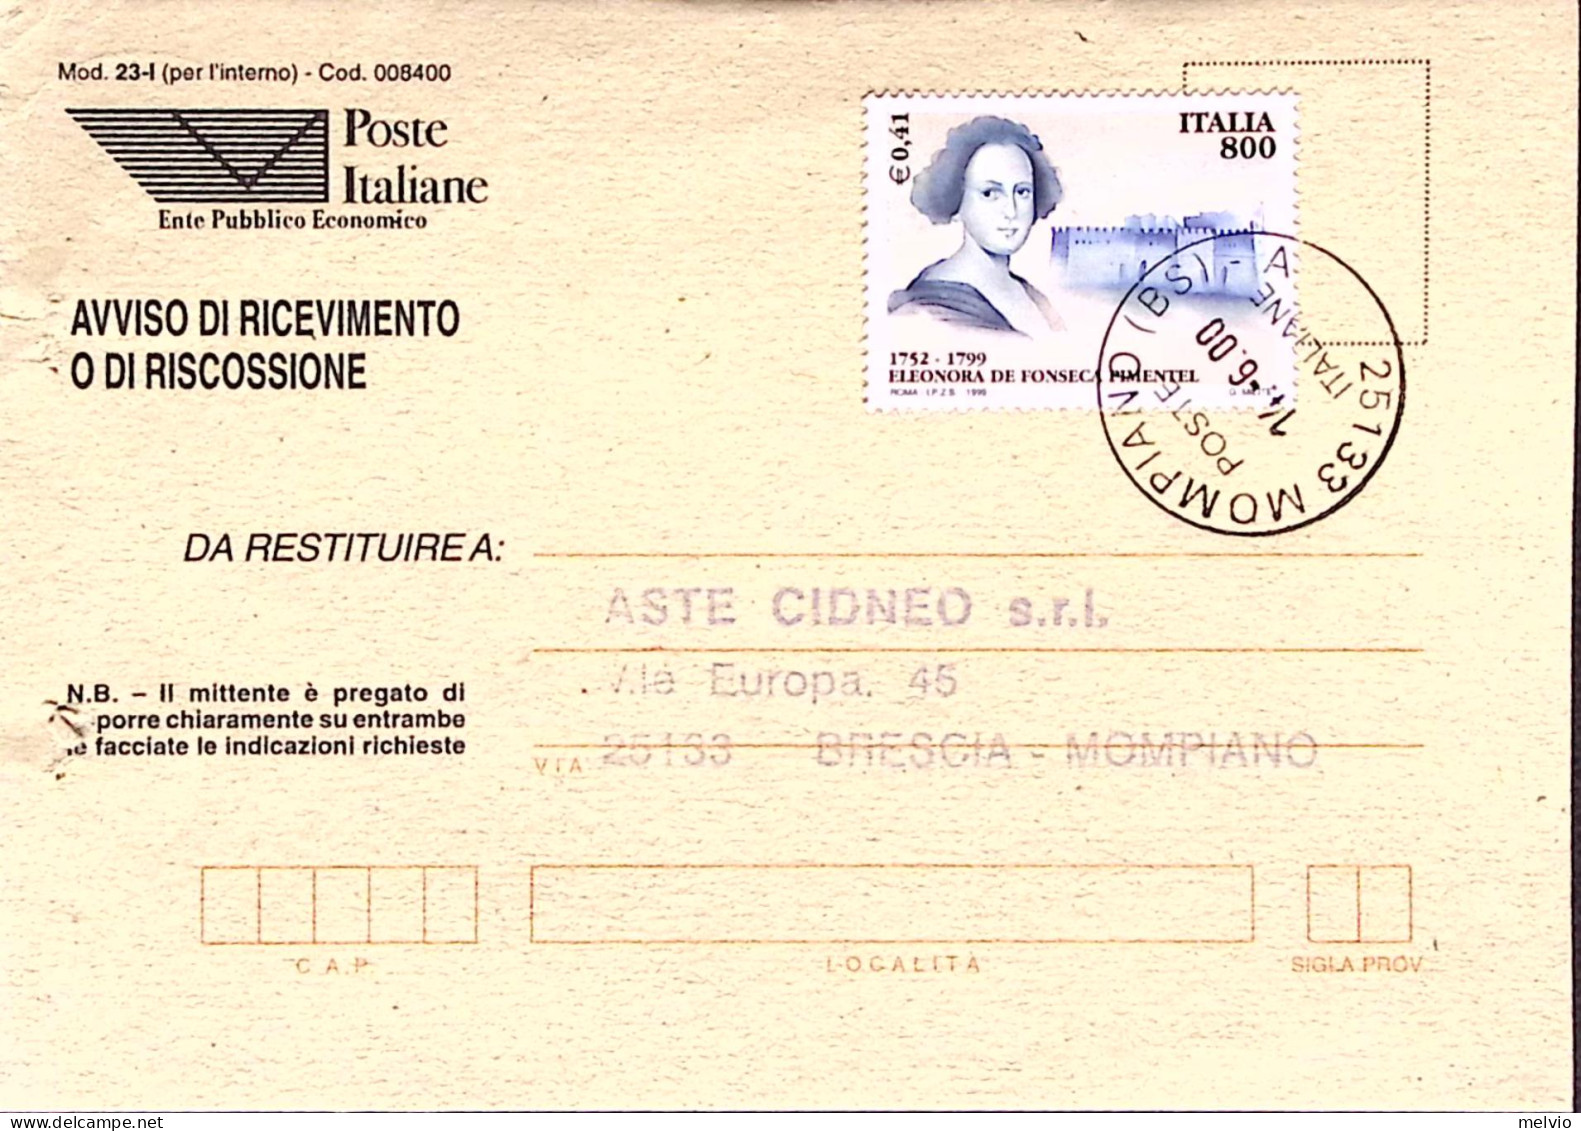 1999-Morte Eleonora De Fonseca Pimentel Lire 800 Isolato Su Avviso Ricevimento - 1991-00: Storia Postale